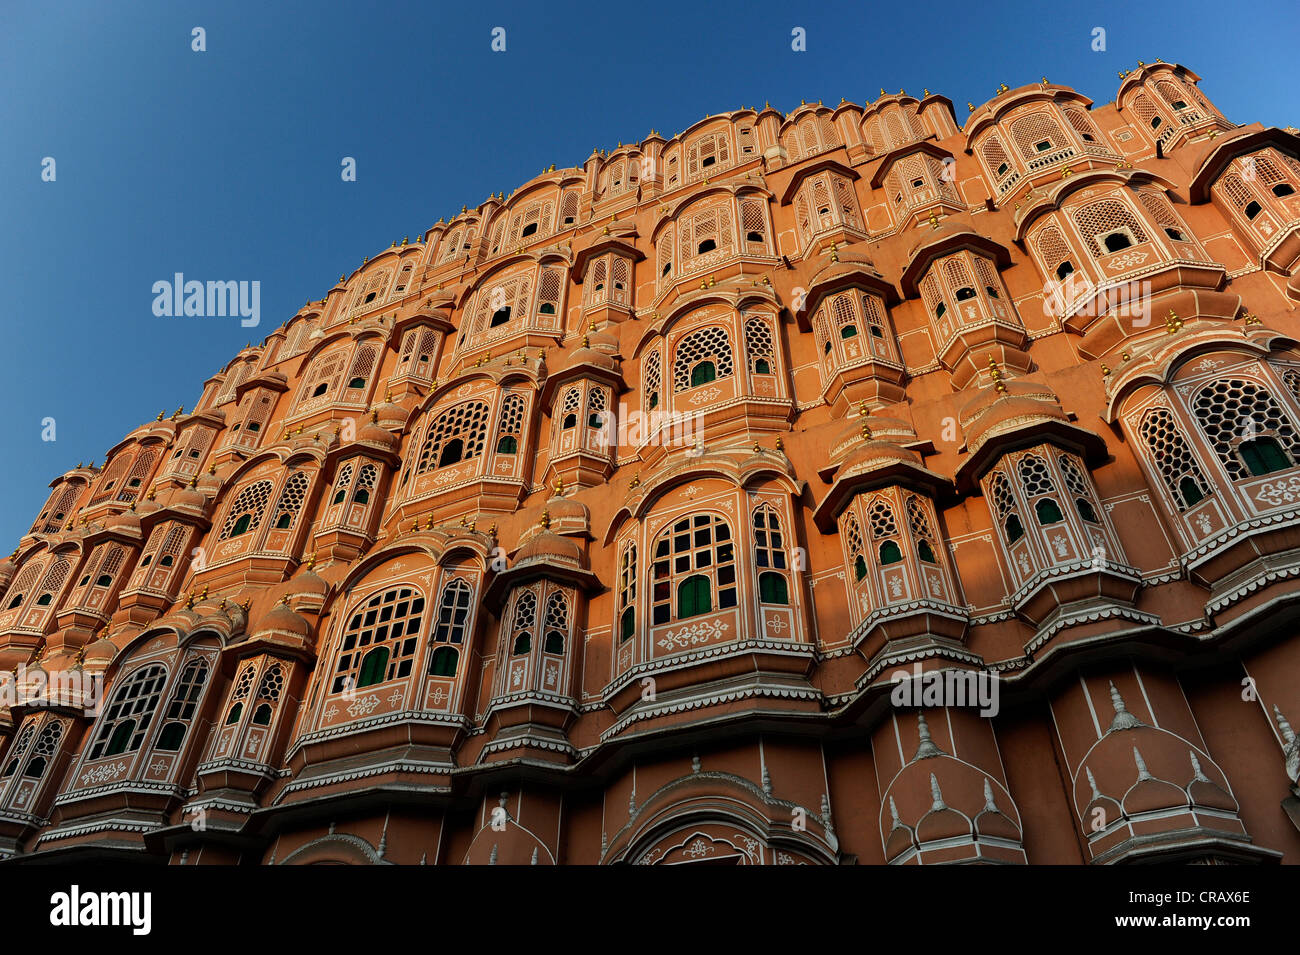 Facade, Palace of Winds, Hawa Mahal, Jaipur, Rajasthan, India, Asia Stock Photo